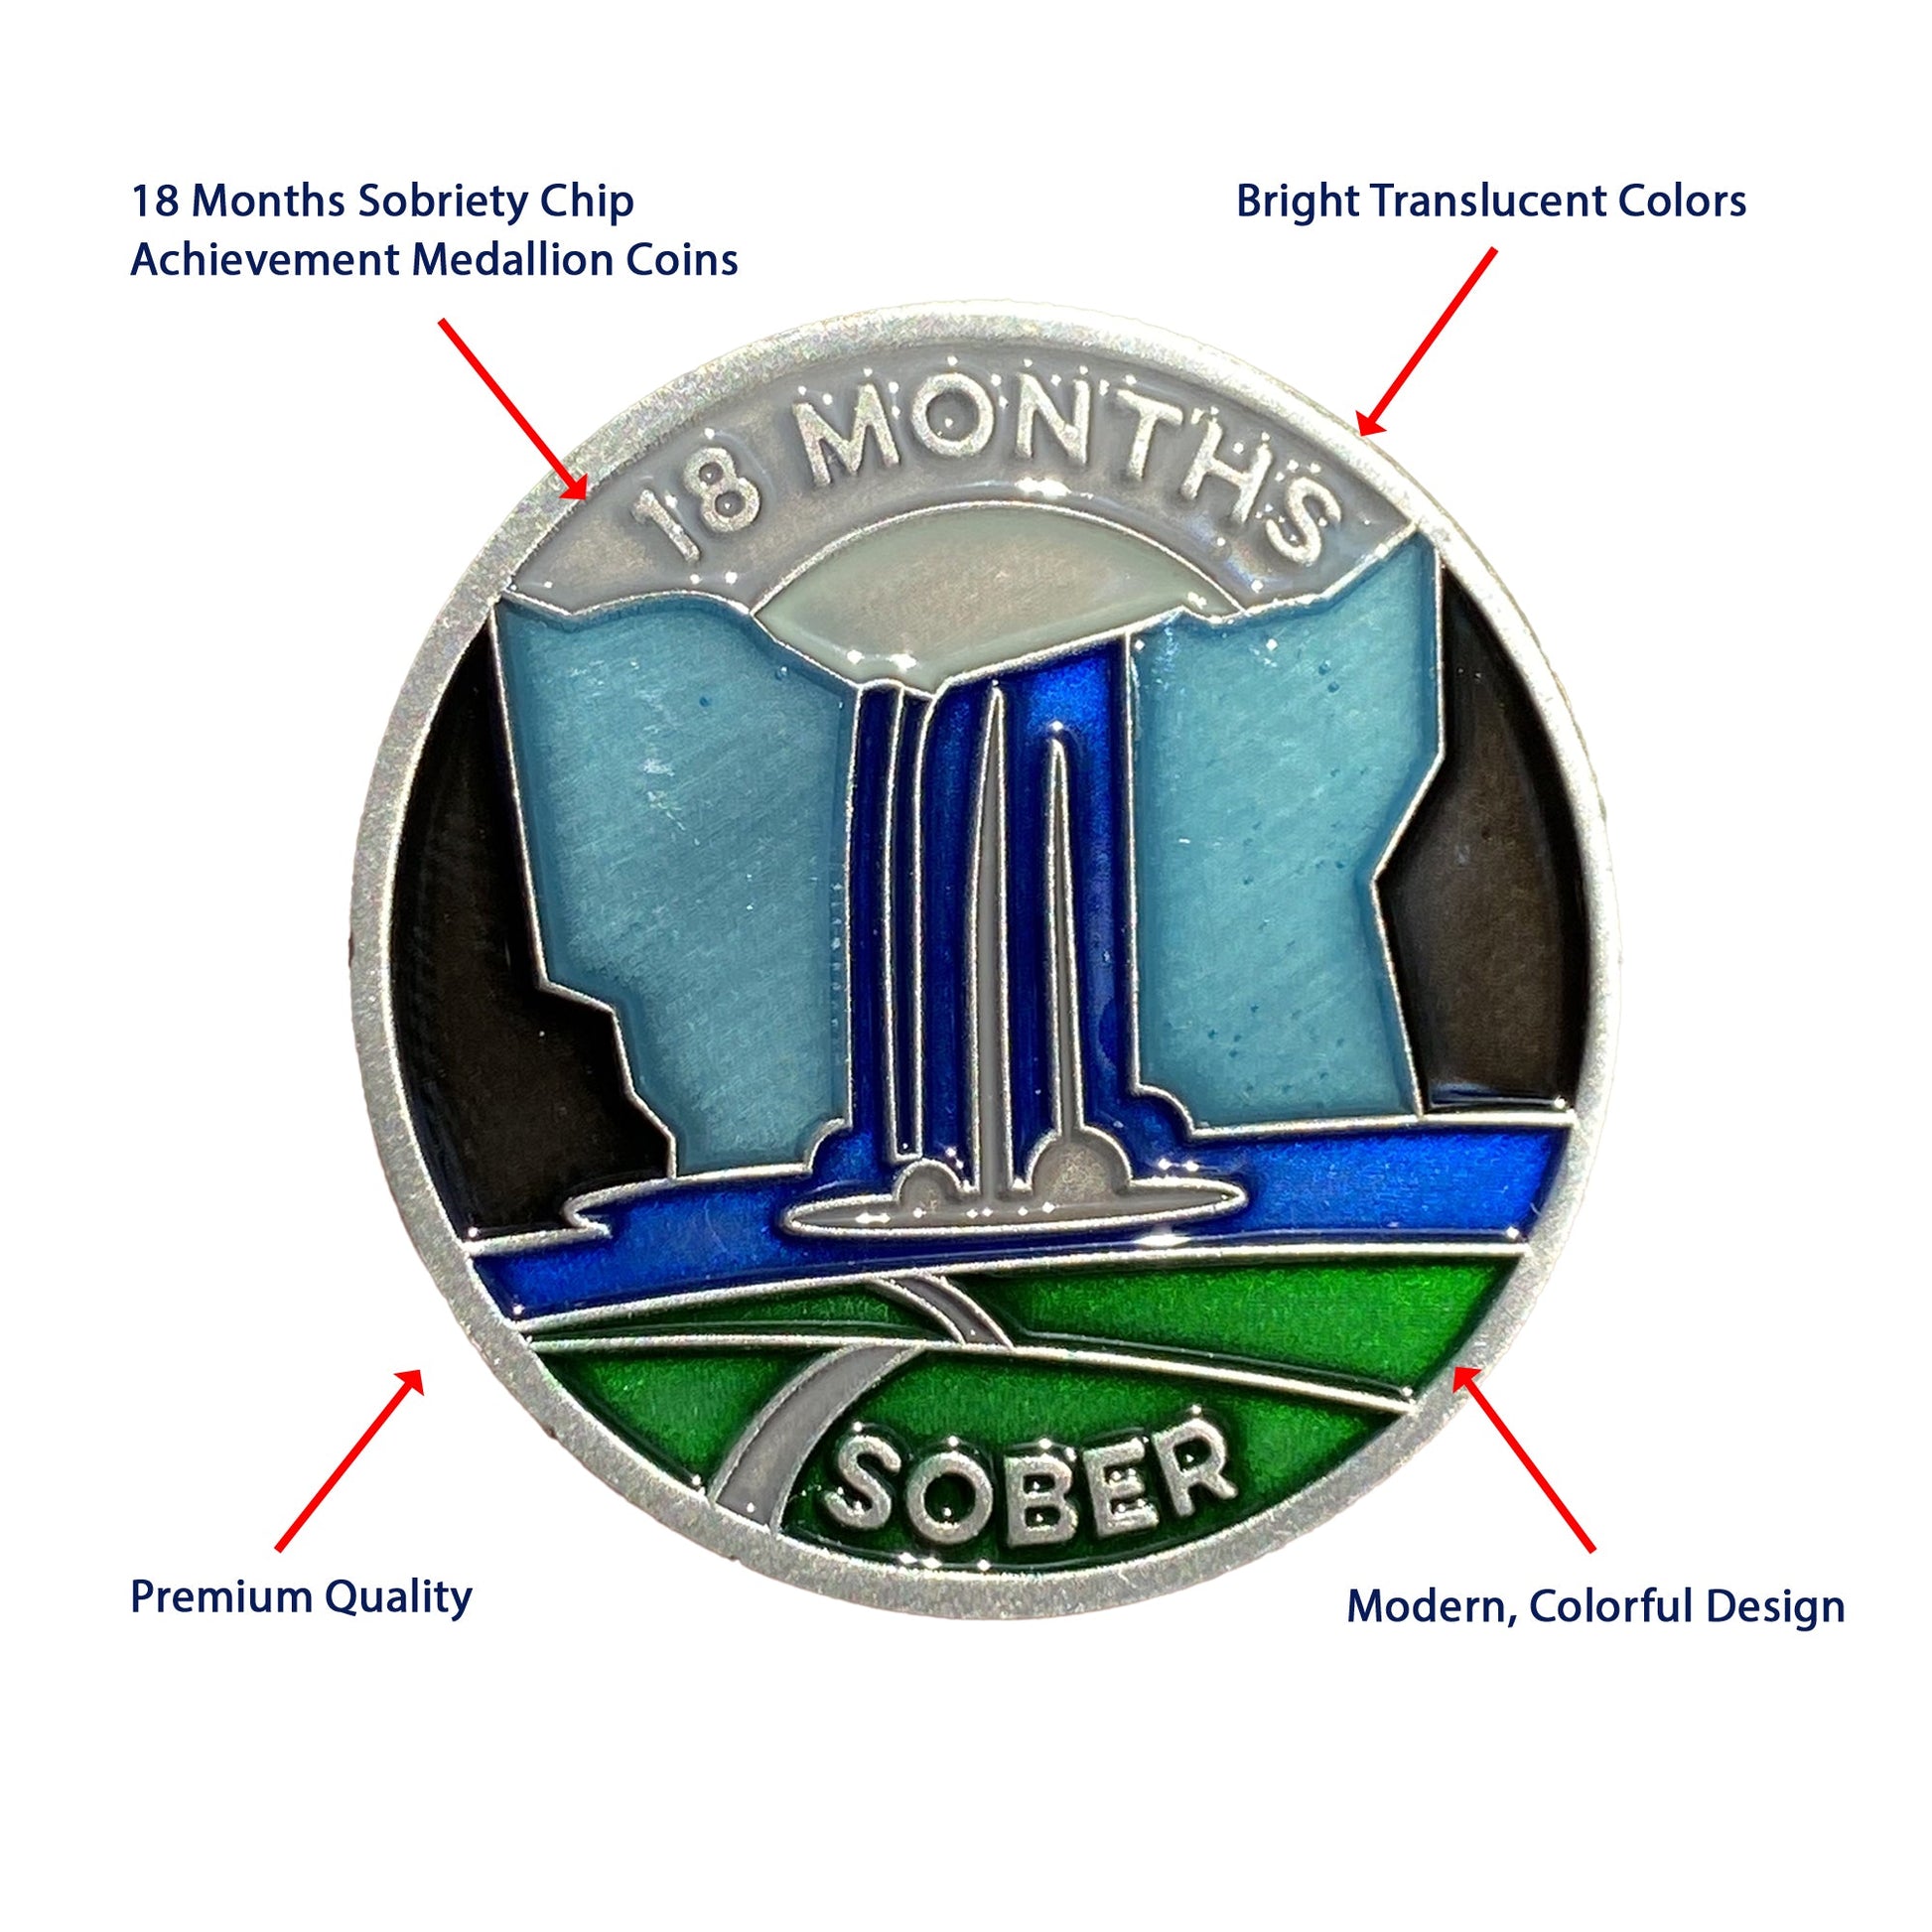 Eighteen Months Sober sobriety coin - The Achieve Mint